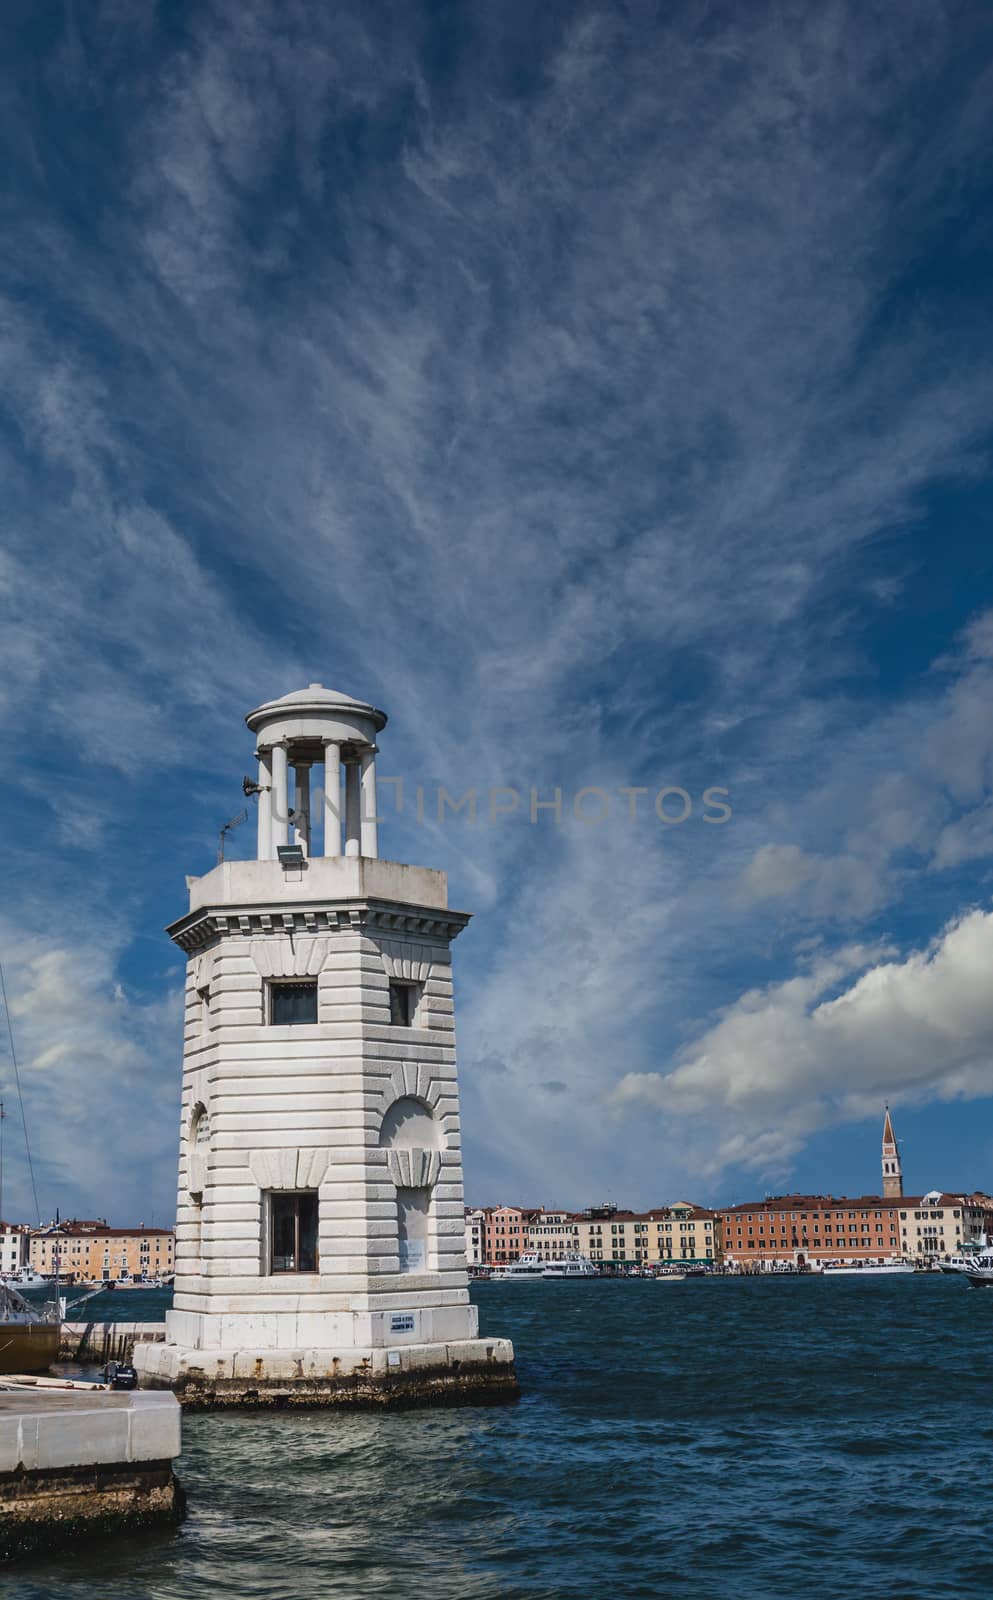 Lighthouse of San Giorgio by dbvirago